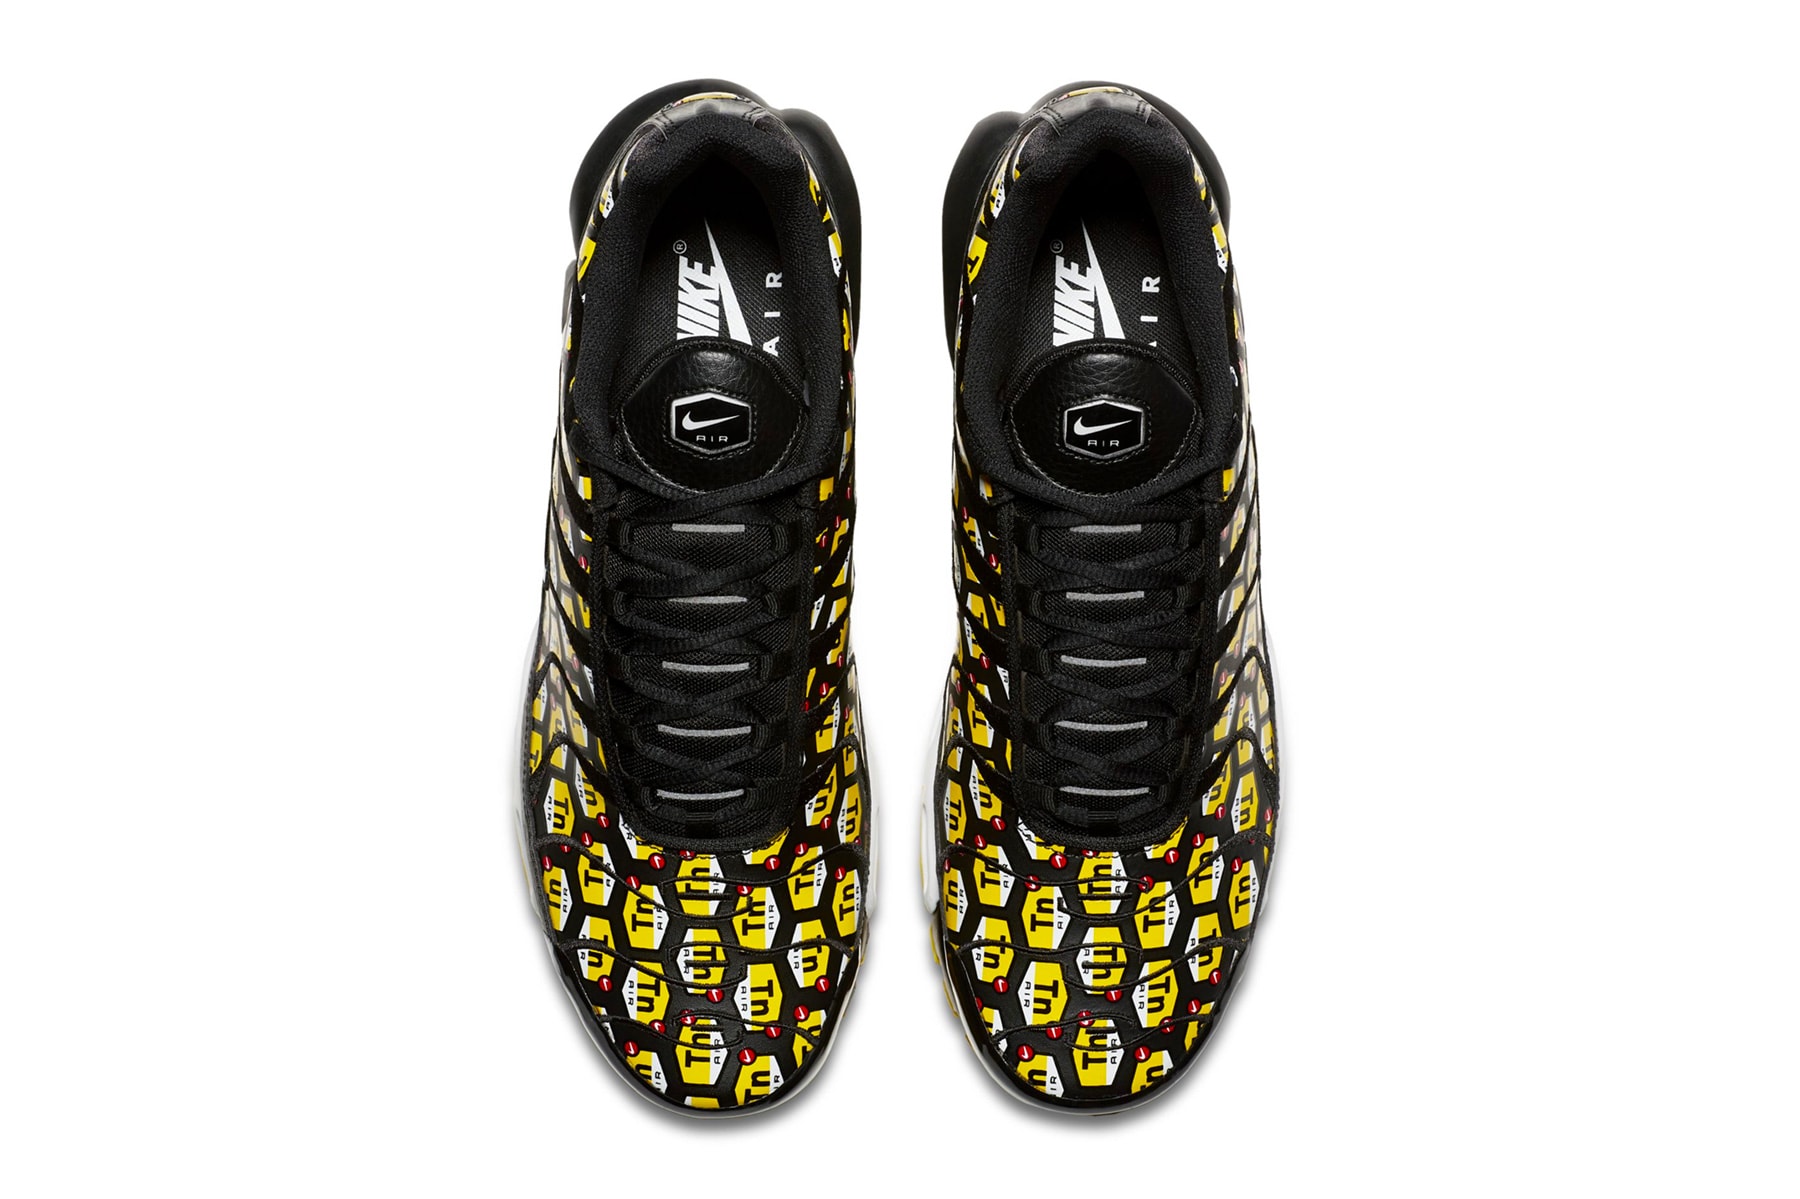 Nike Air Max Plus QS "Tn Logo" pattern sneaker white black yellow